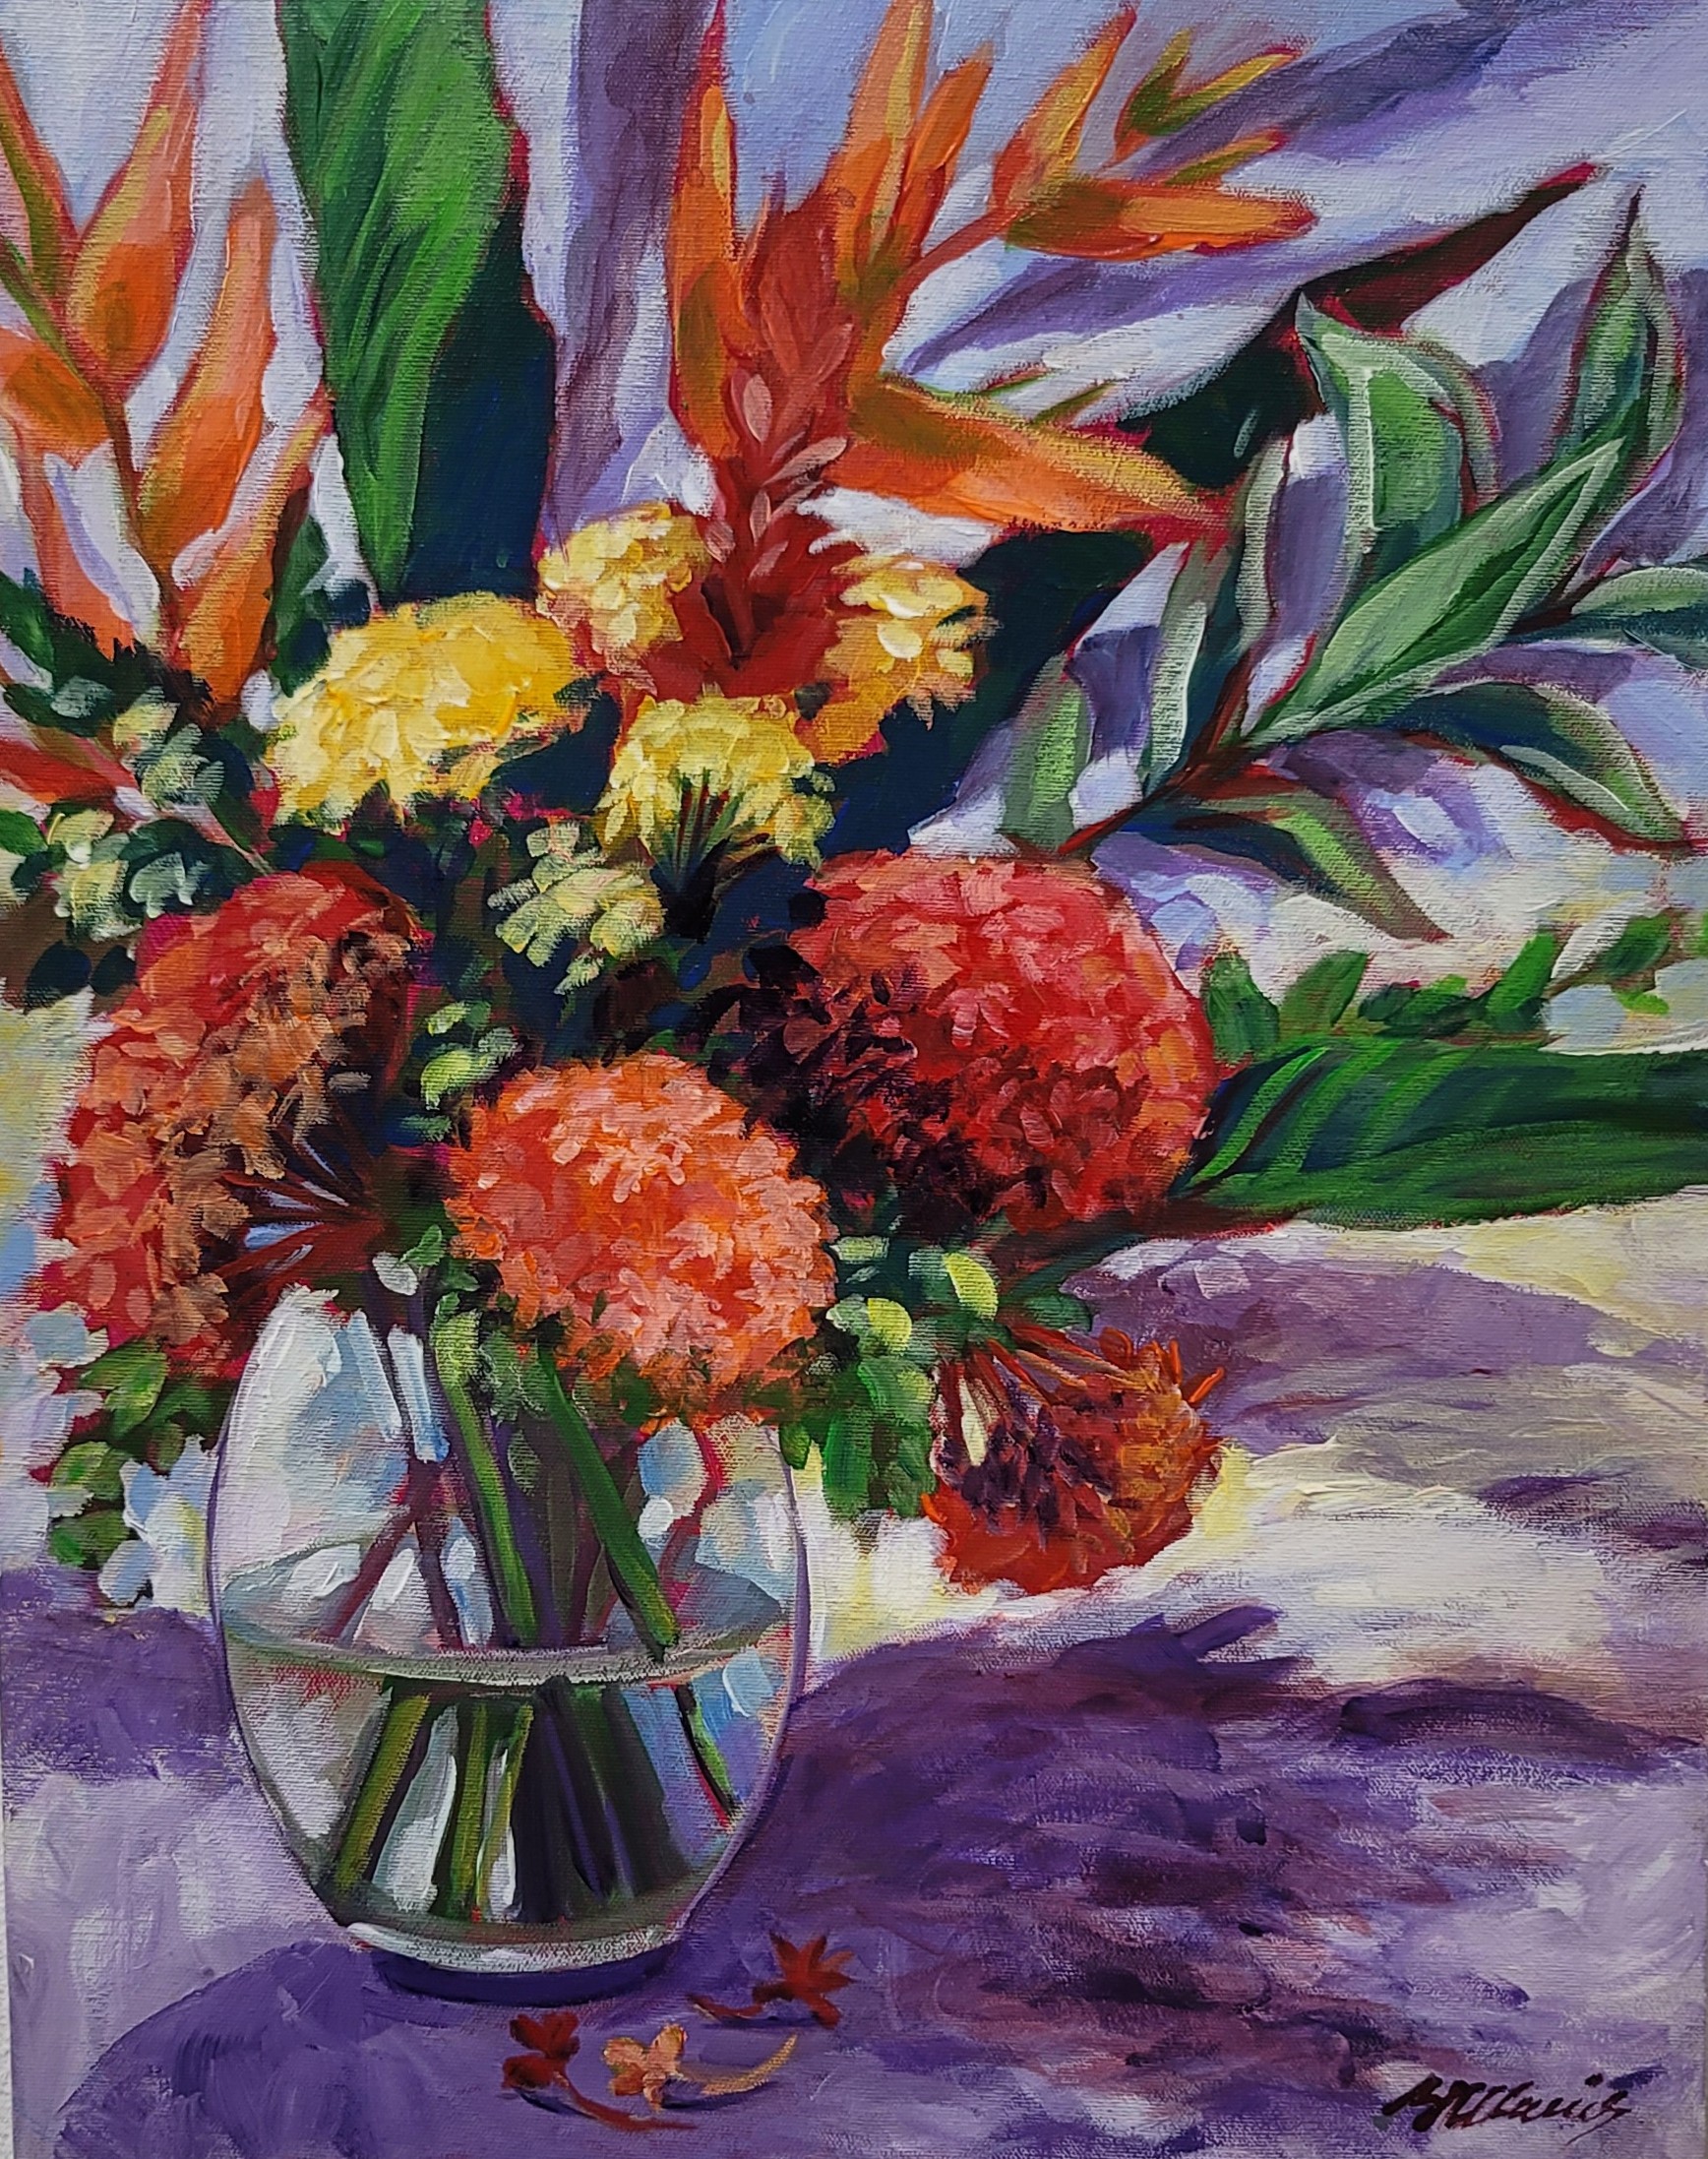 Bright Red Ixora Flowers in vase - 4700TTD